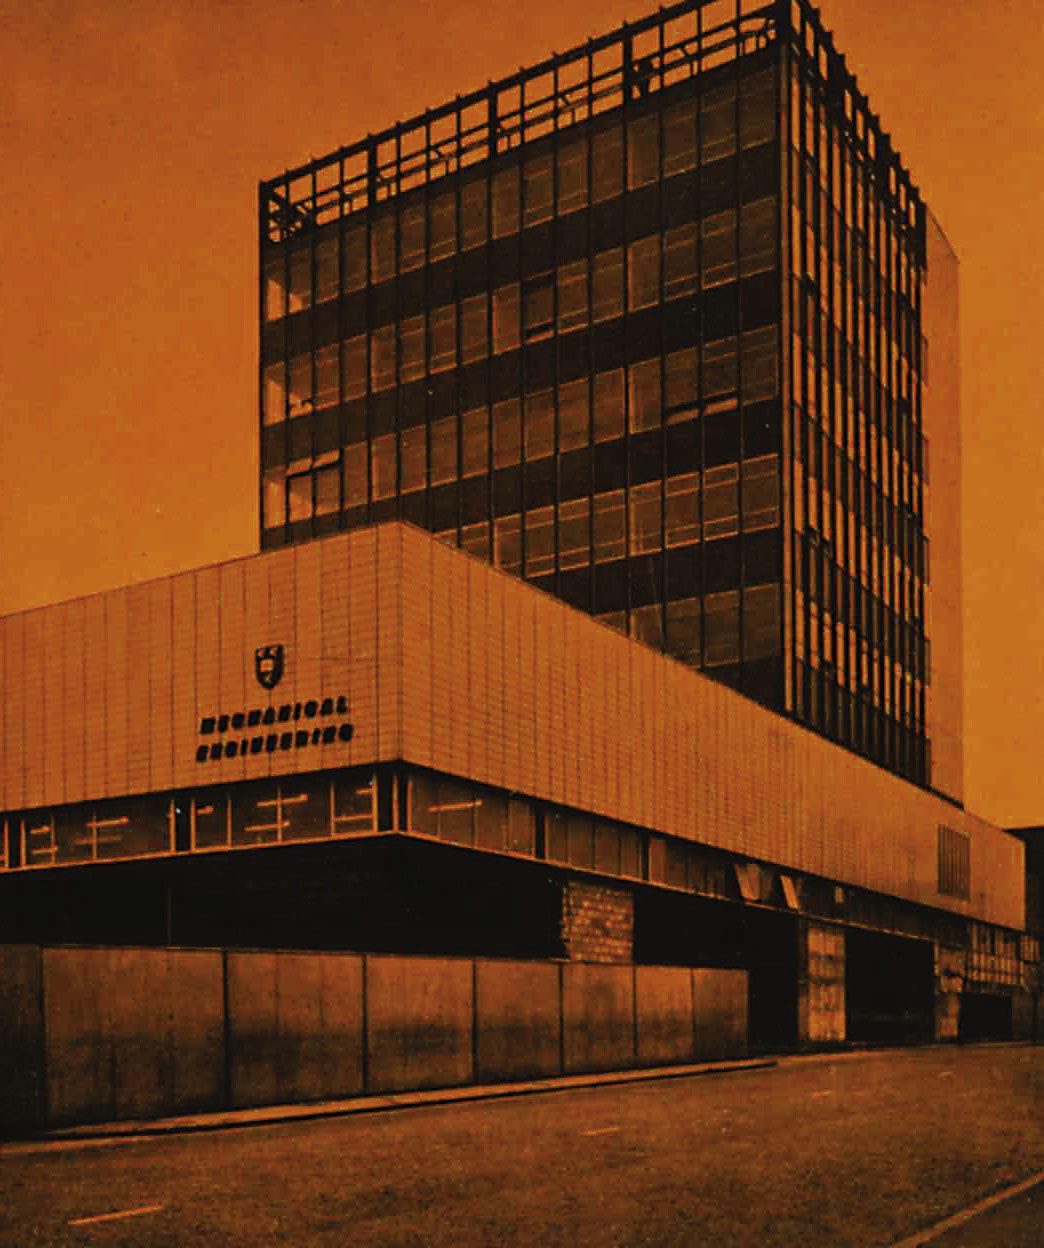 40 Years Ago: University of Liverpool